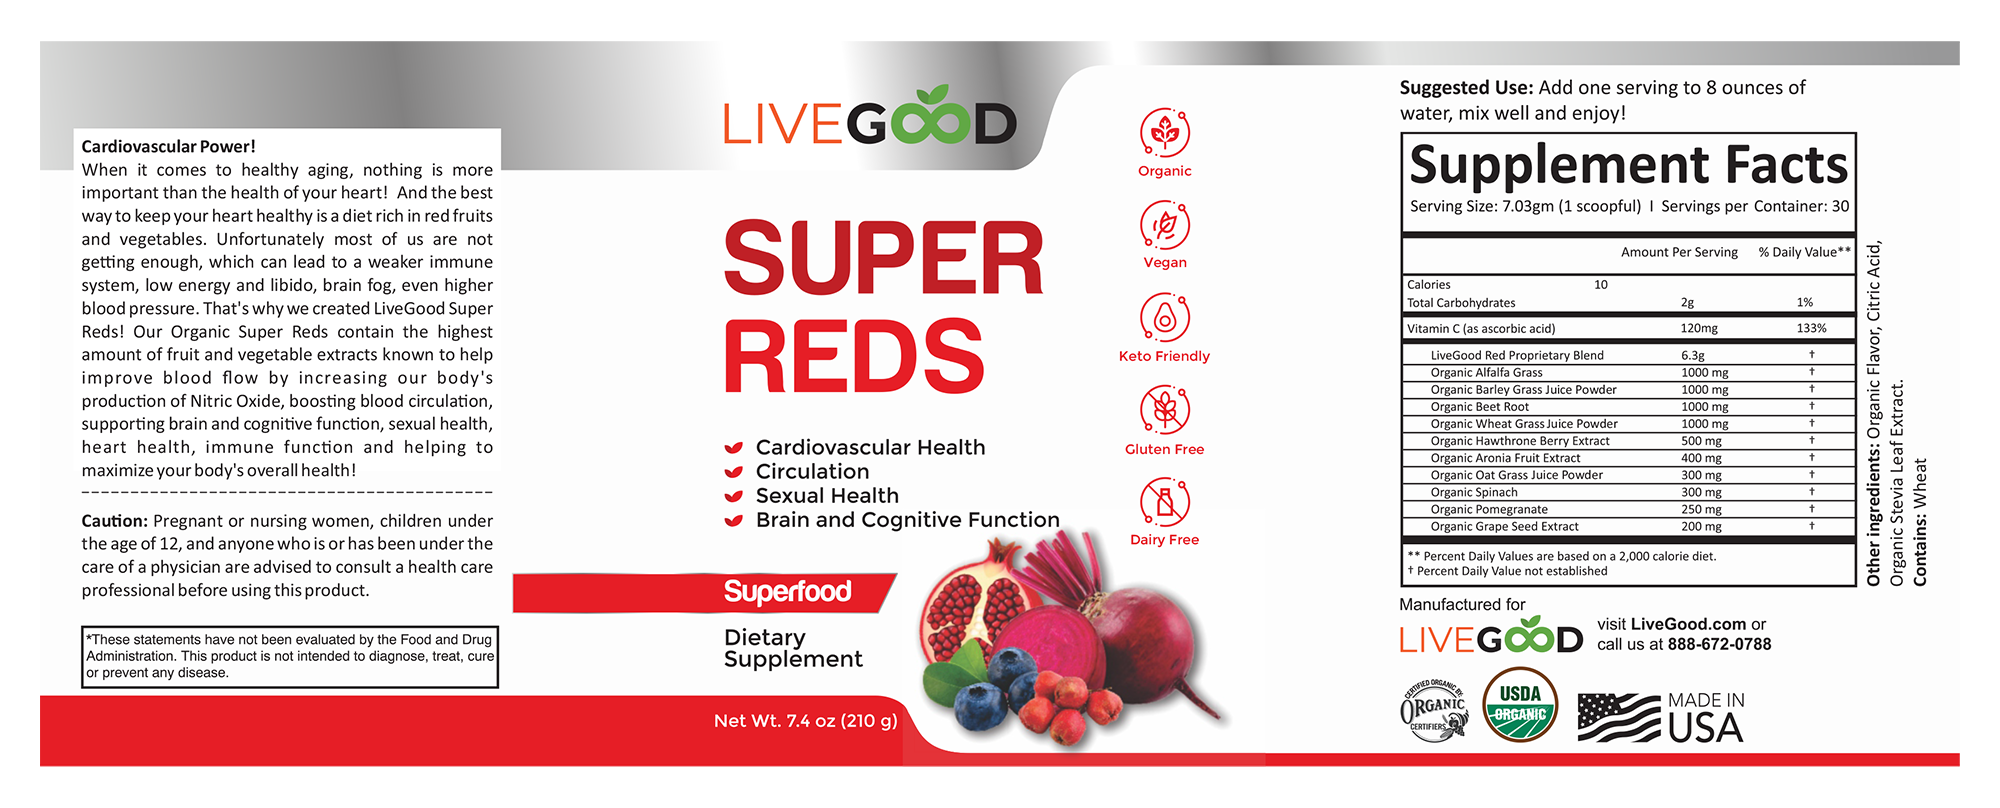 LiveGood-SUPER-REDS-Label-Jean-Marc-Fraiche-Partage66.com